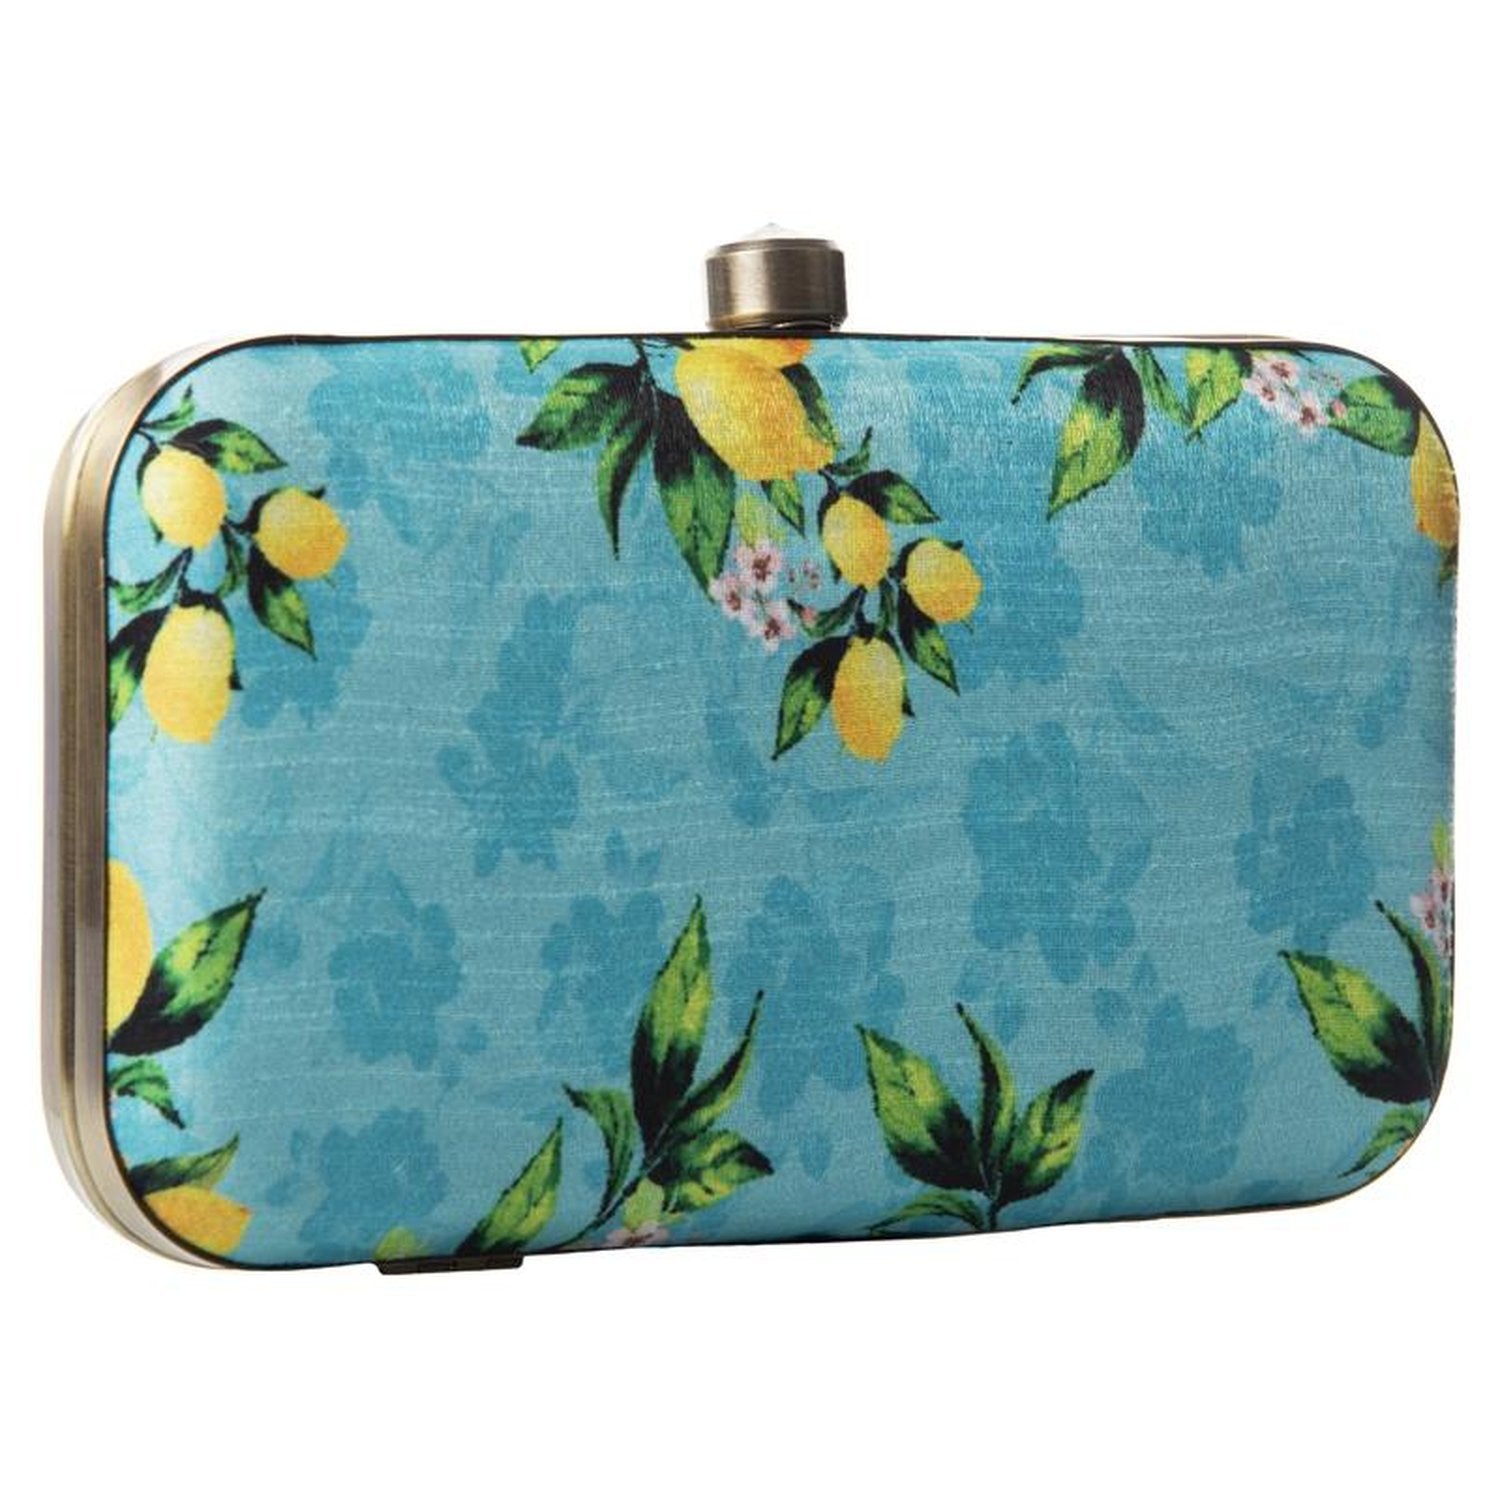 BRAND NEW HANDICRAFT BEAUTIFUL BLING BOX CLUTCH BAG PURSE FOR WOMEN -  (BA23) | eBay